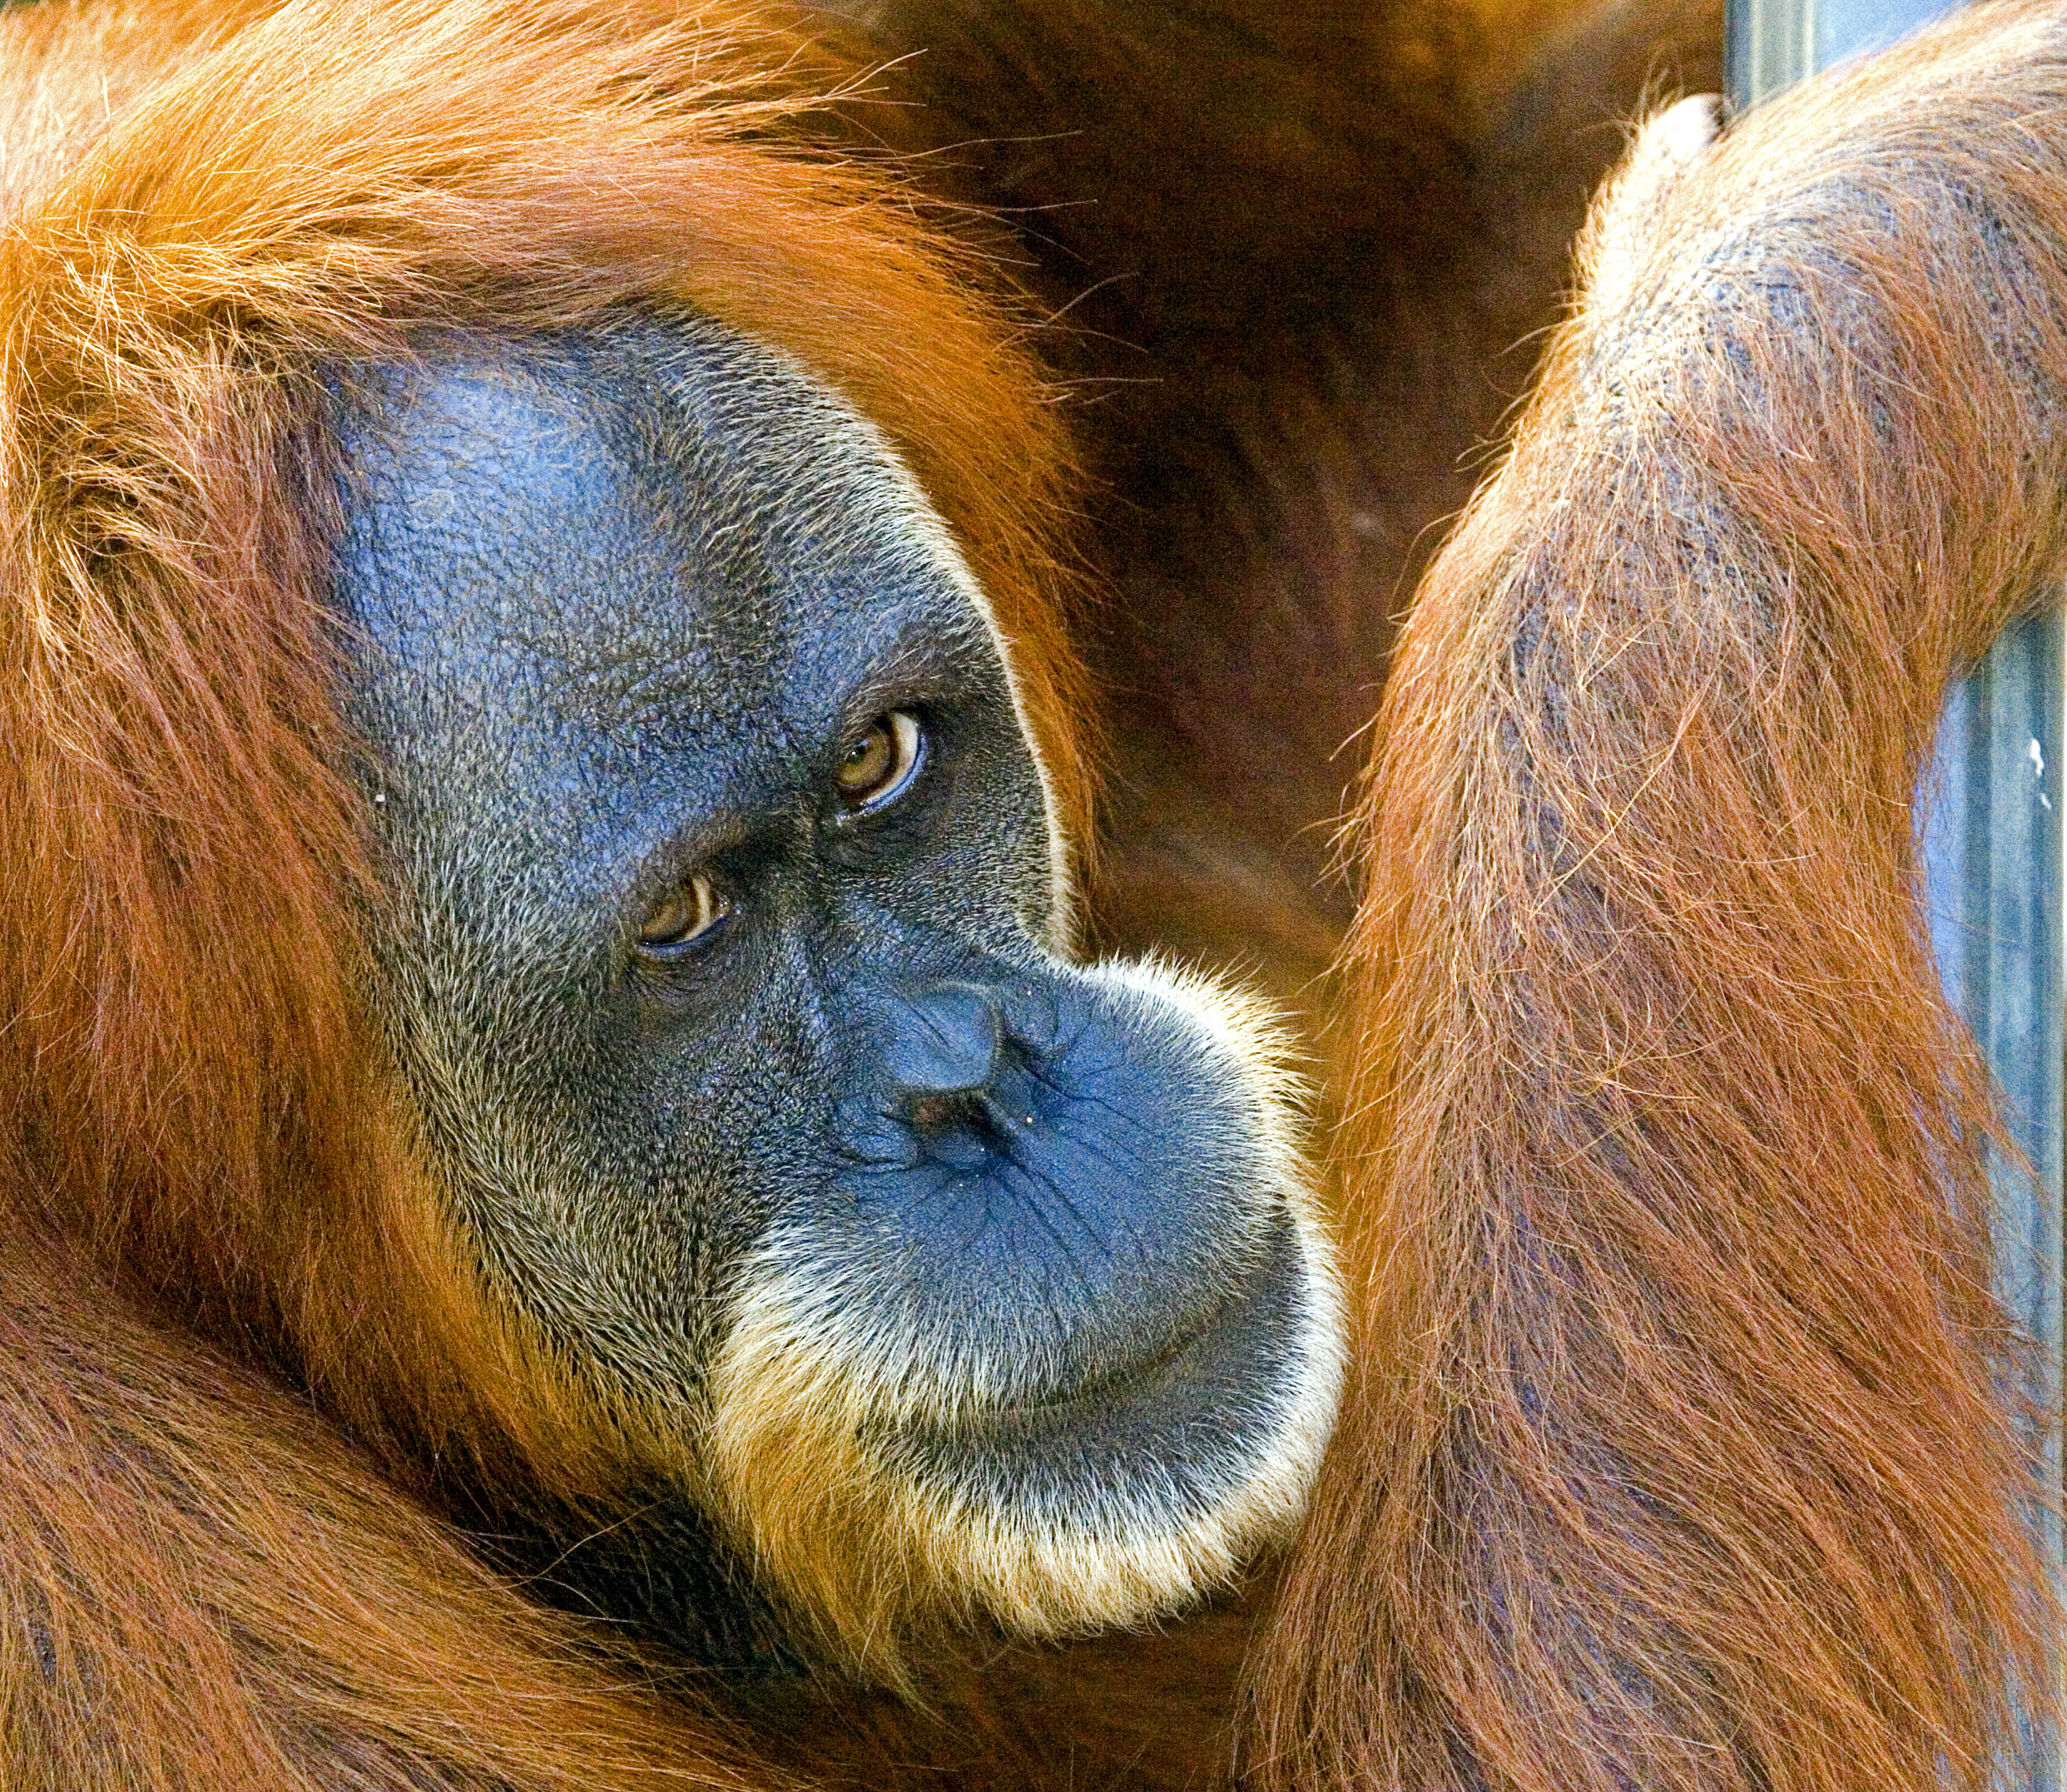  Orangutan  ss823438 Borneo Orangutan  Survival Australia